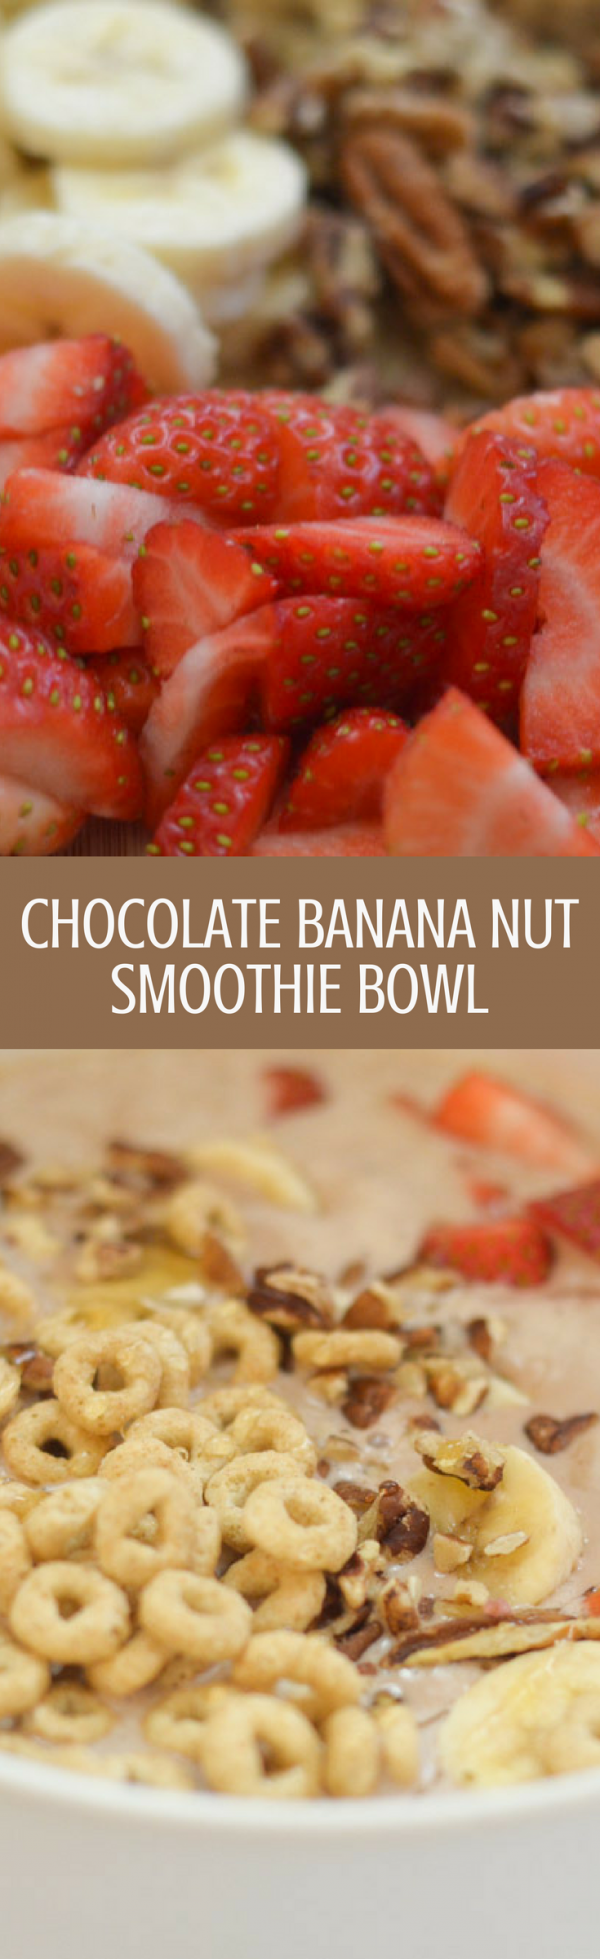 Chocolate Banana Nut Smoothie Bowl